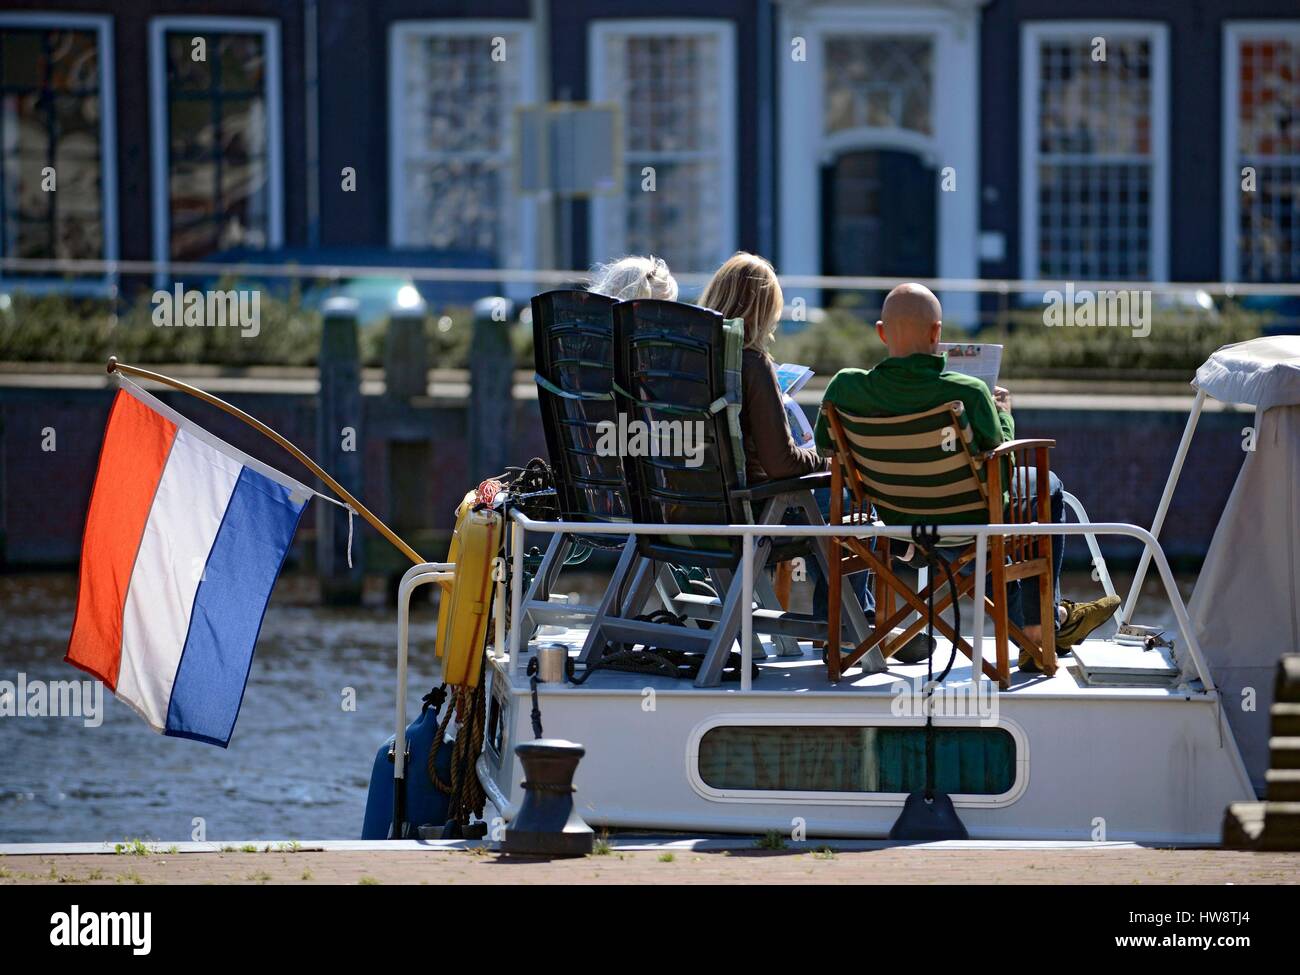 Netherlands, Holland, Haarlem, sunbathing on a boat Stock Photo